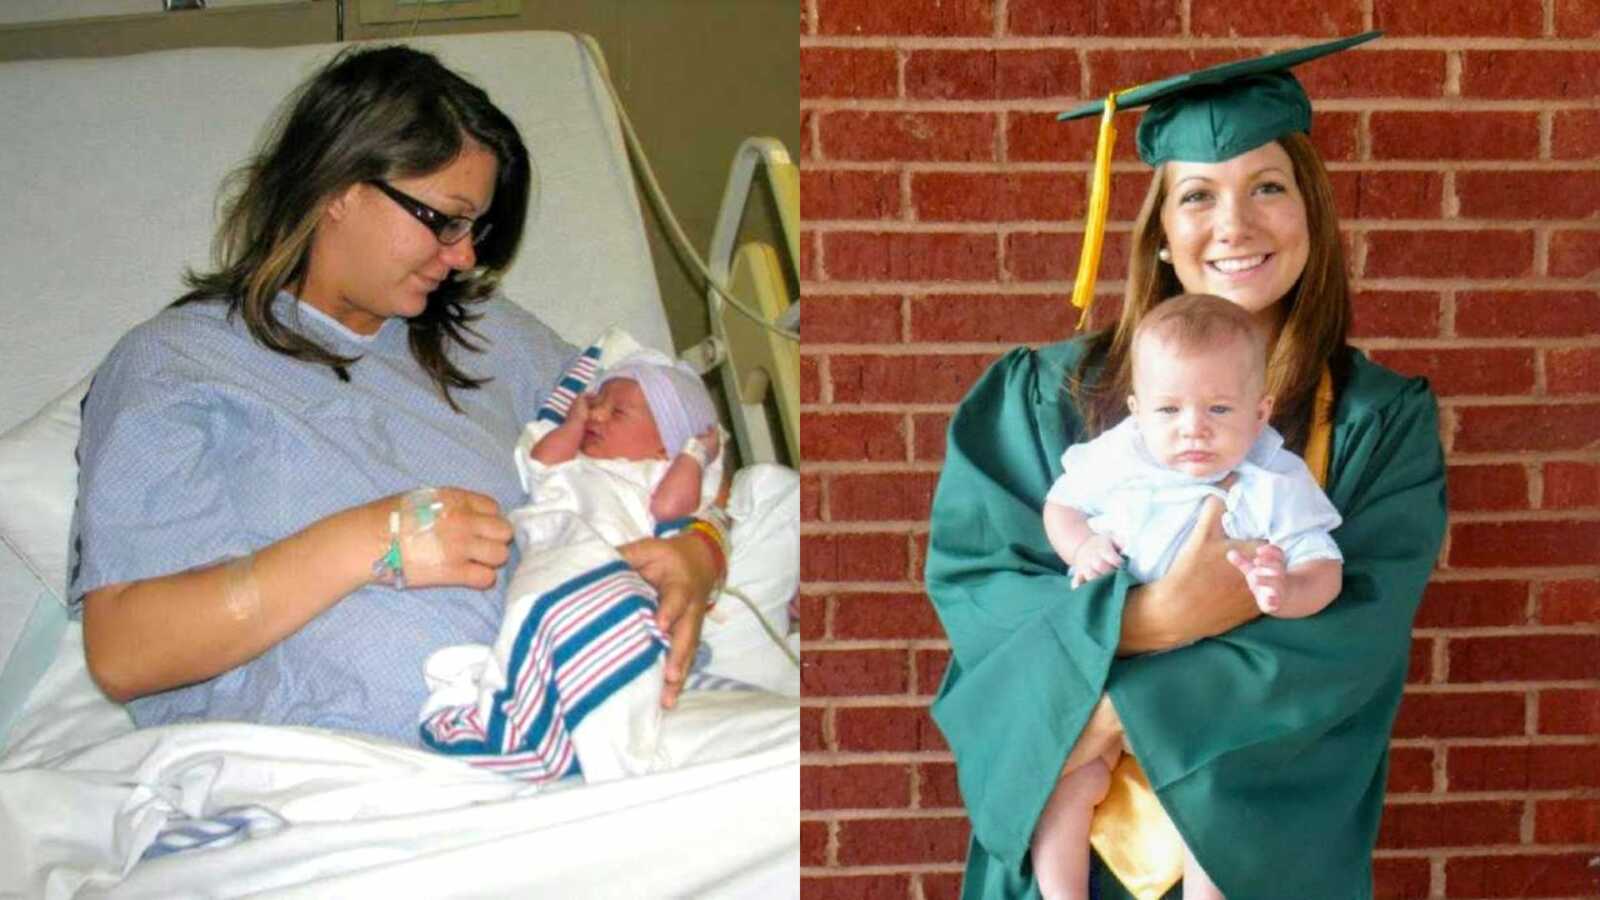 Teen mom holding newborn baby in hospital